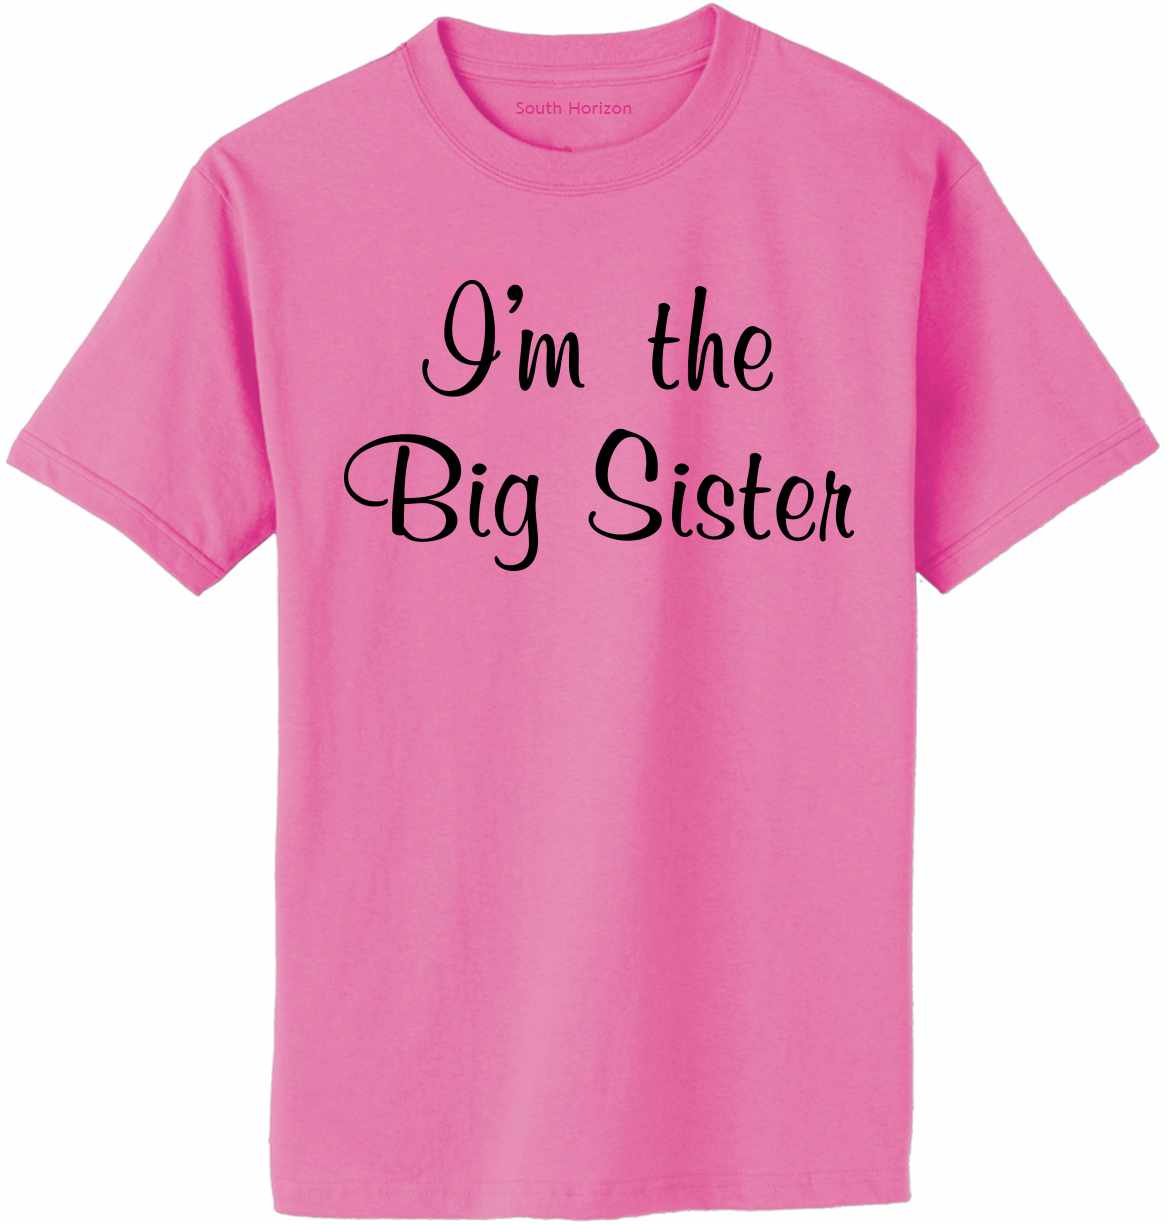 I'm the Big Sister on Adult T-Shirt